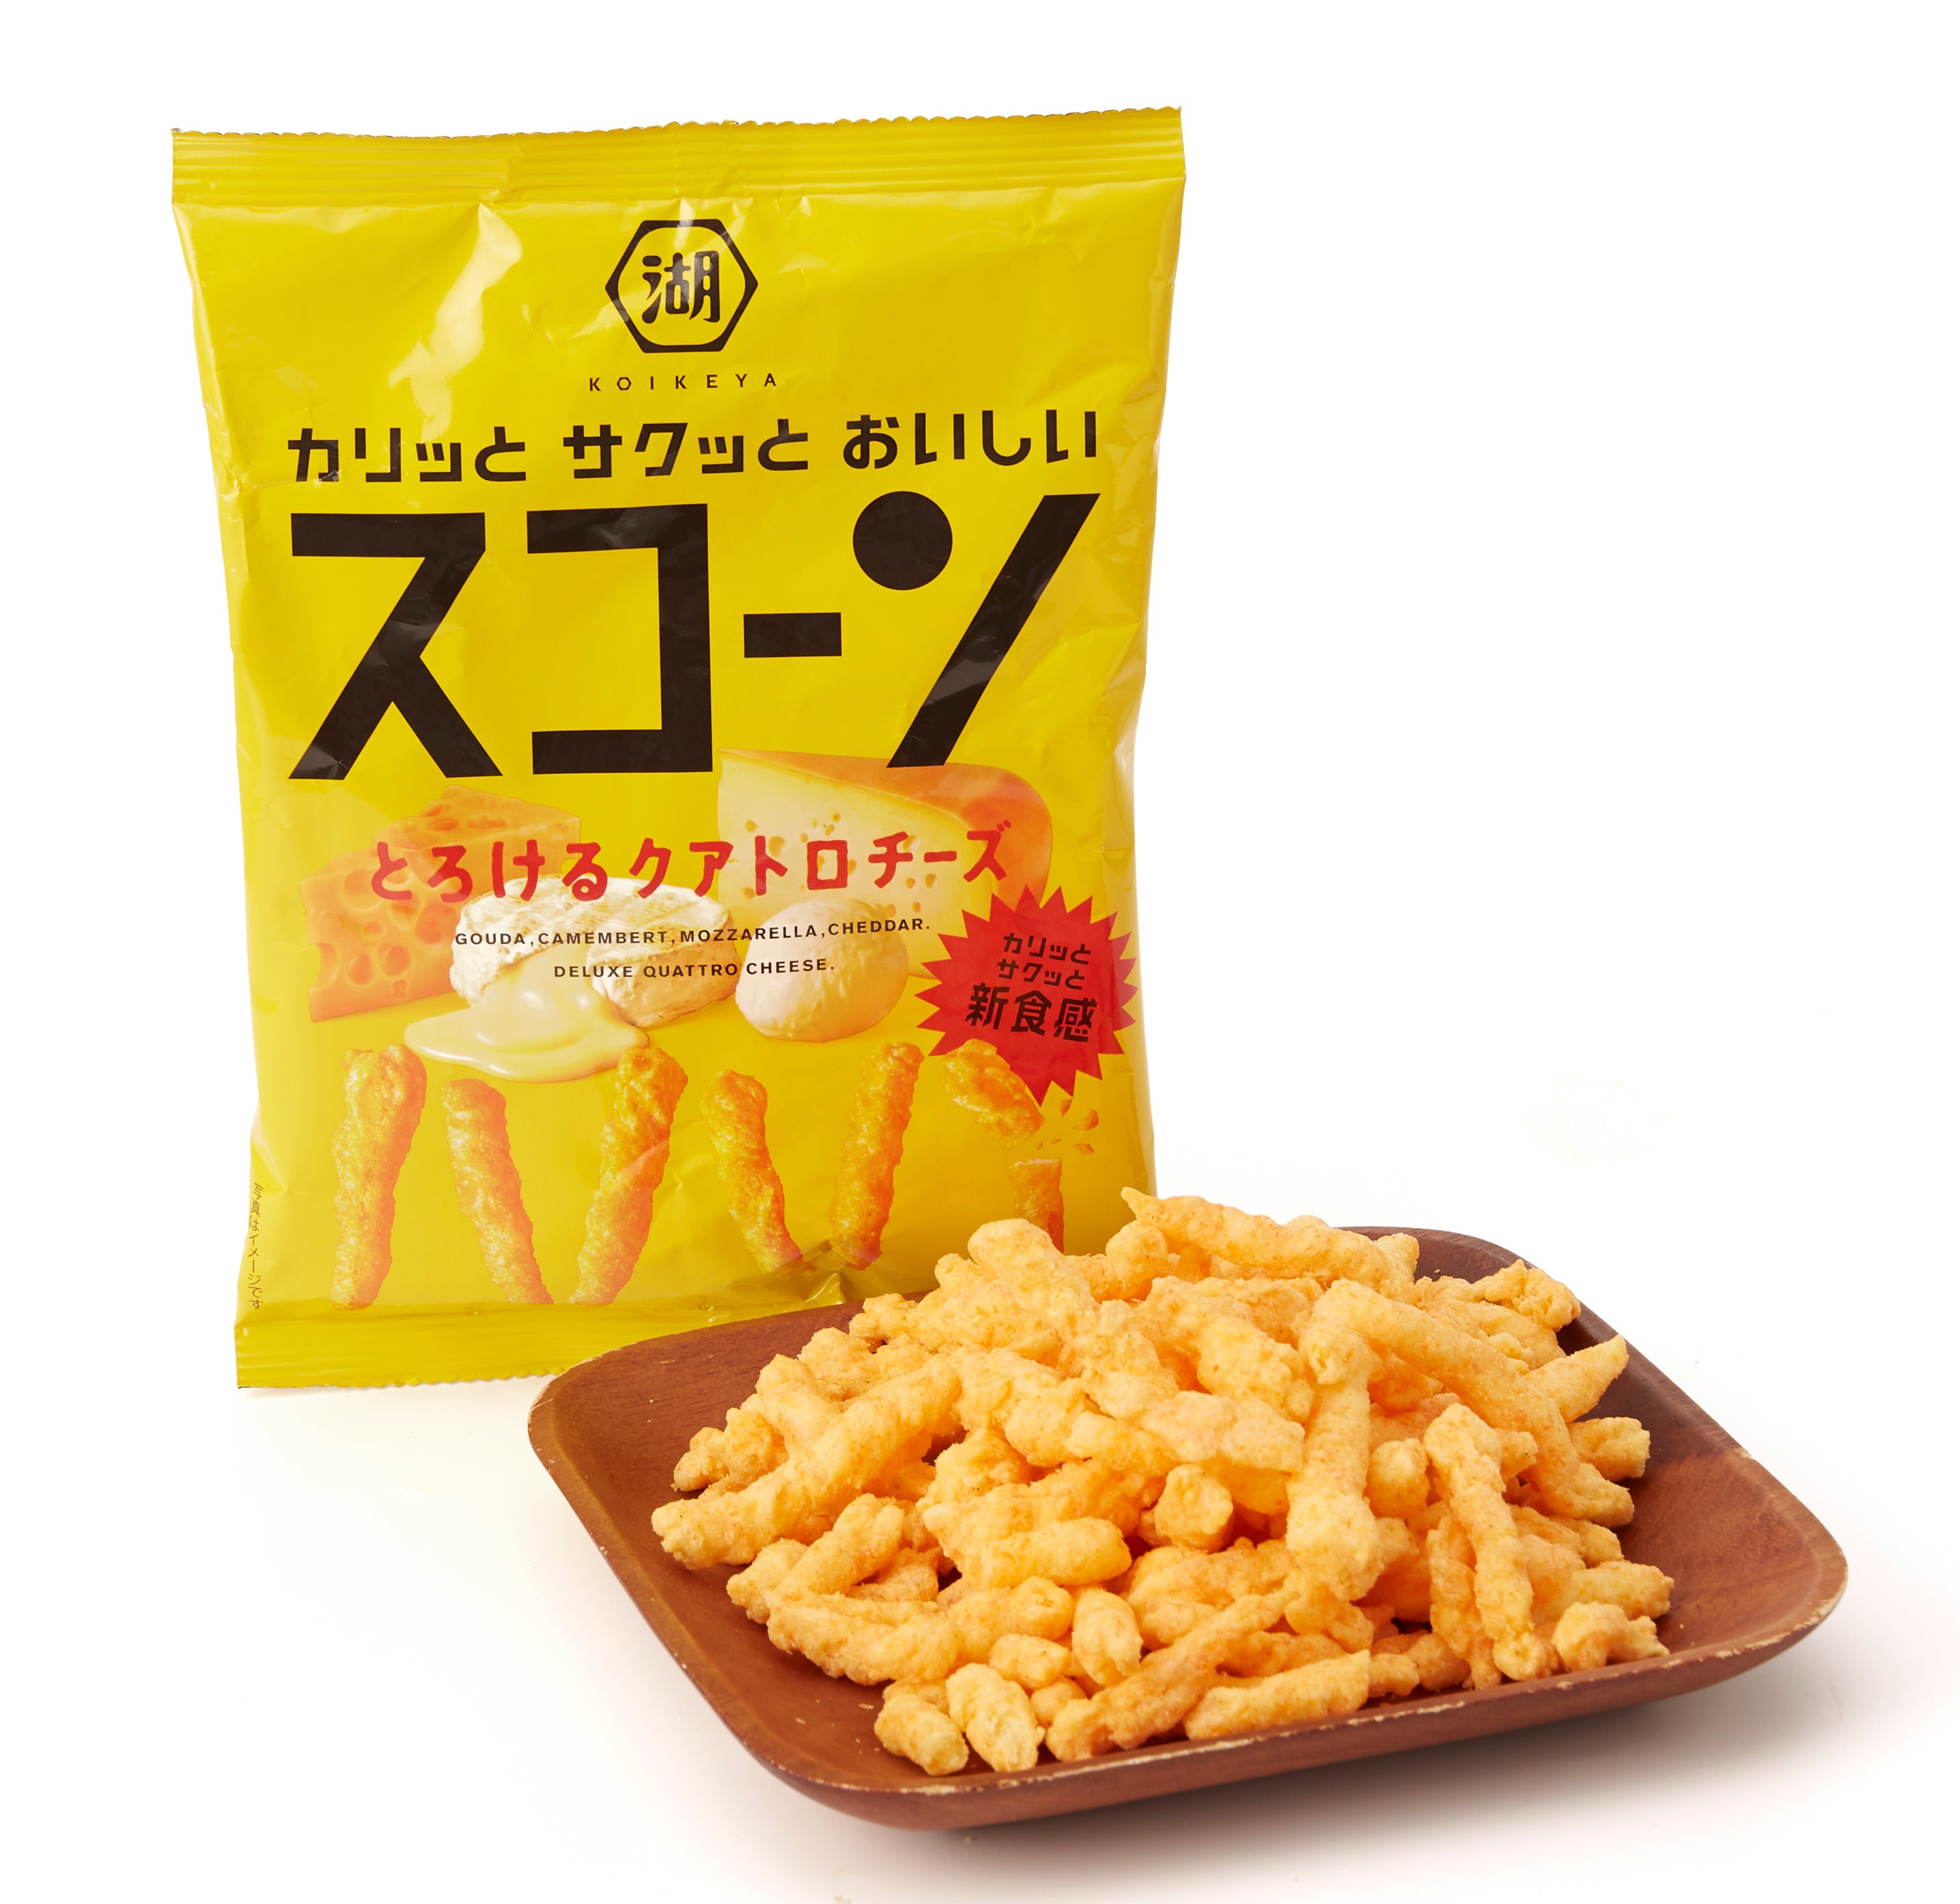 Cheetos Cheddar Cheese & Jalapeno, Mini Mart